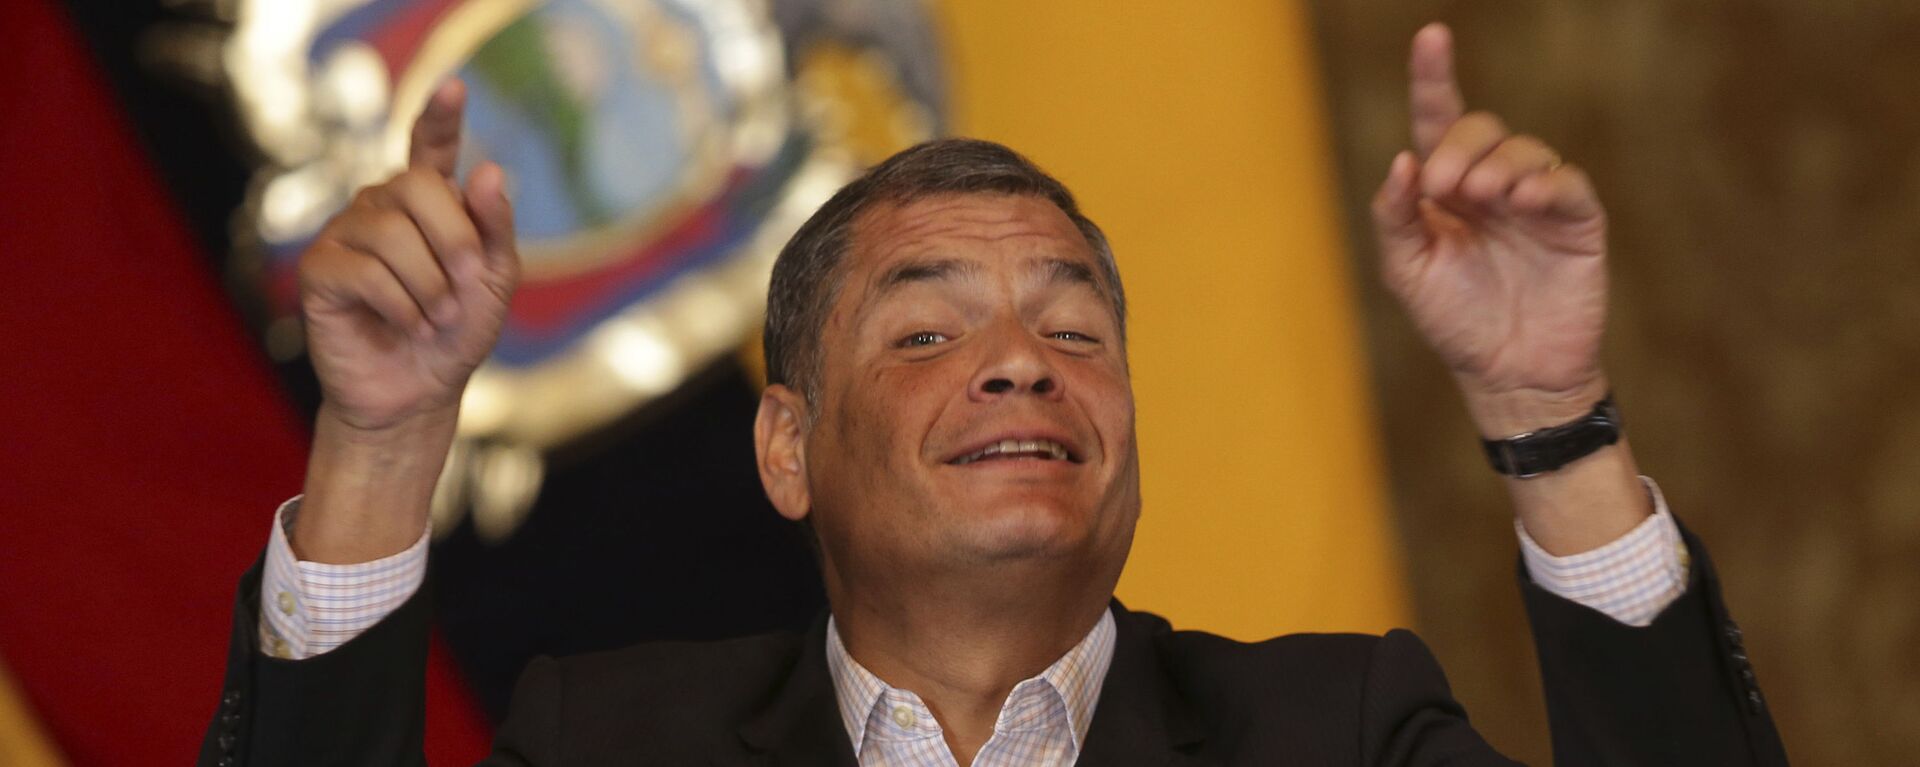 Rafael Correa, expresidente de Ecuador (archivo) - Sputnik Mundo, 1920, 08.02.2021